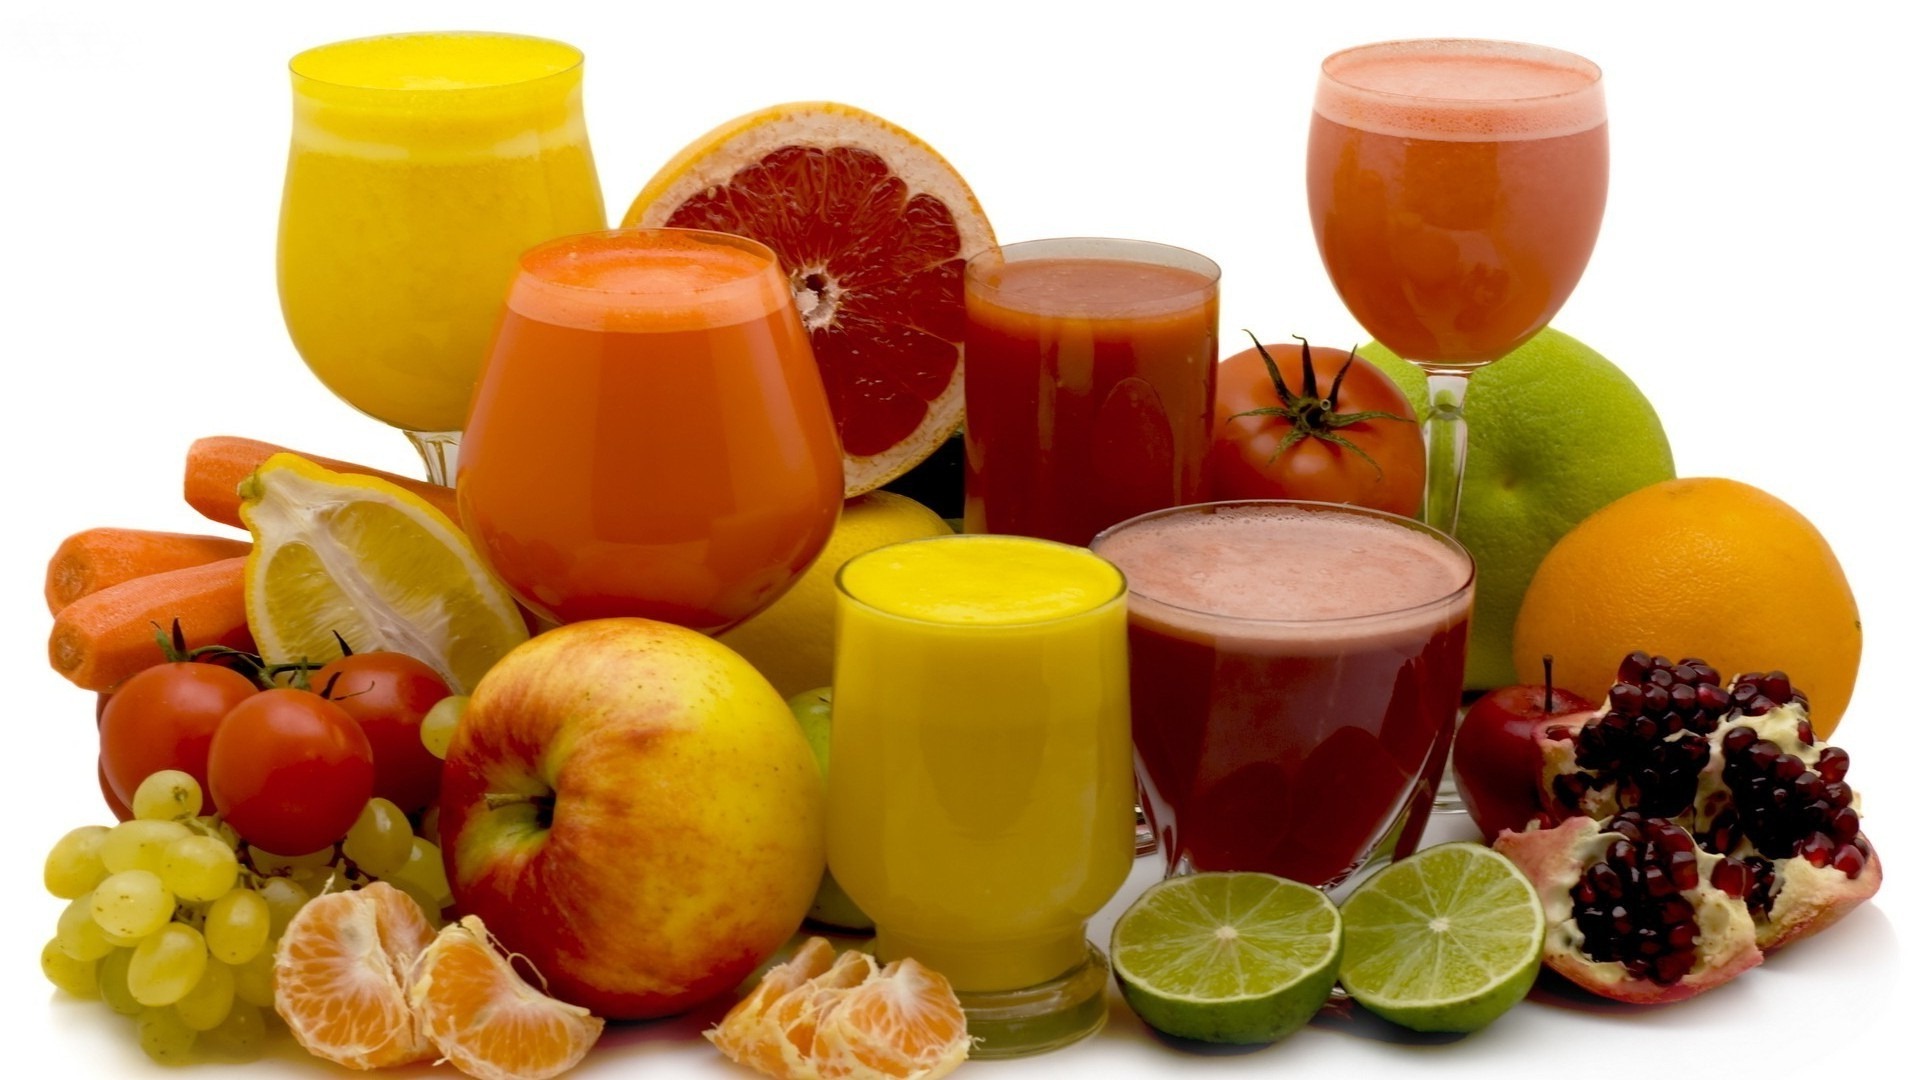 tesco_summer_fruits_juice_drink